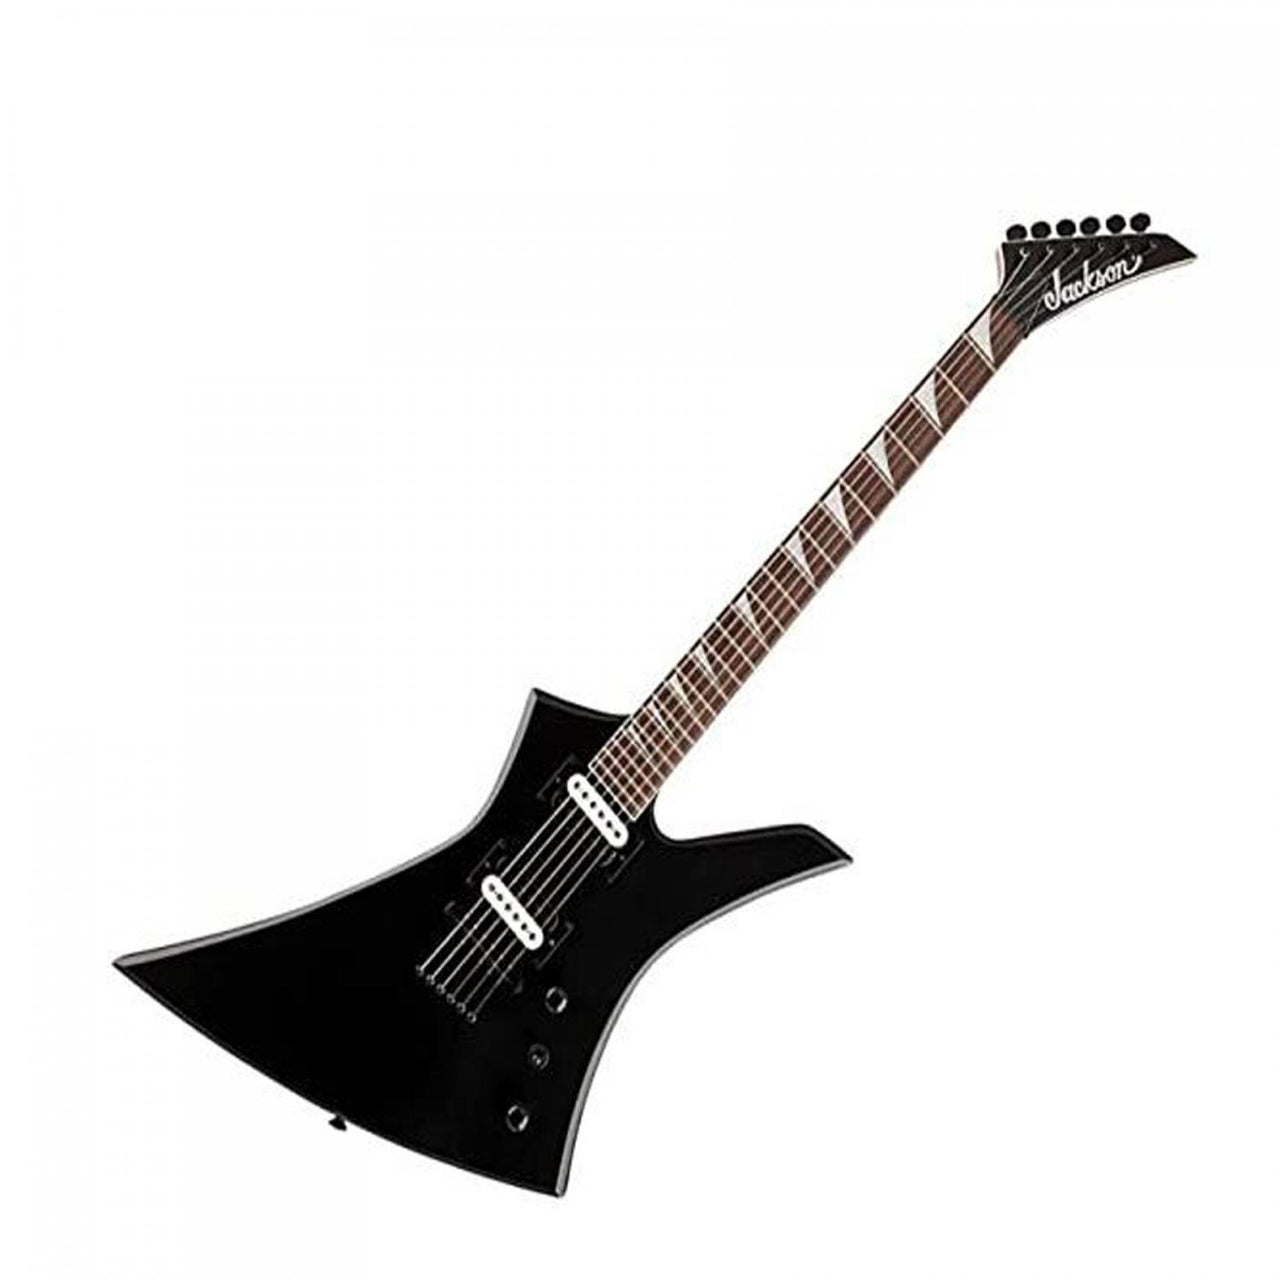 Guitarra Jackson Kelly Js32t Electrica Satin Black 2910123568